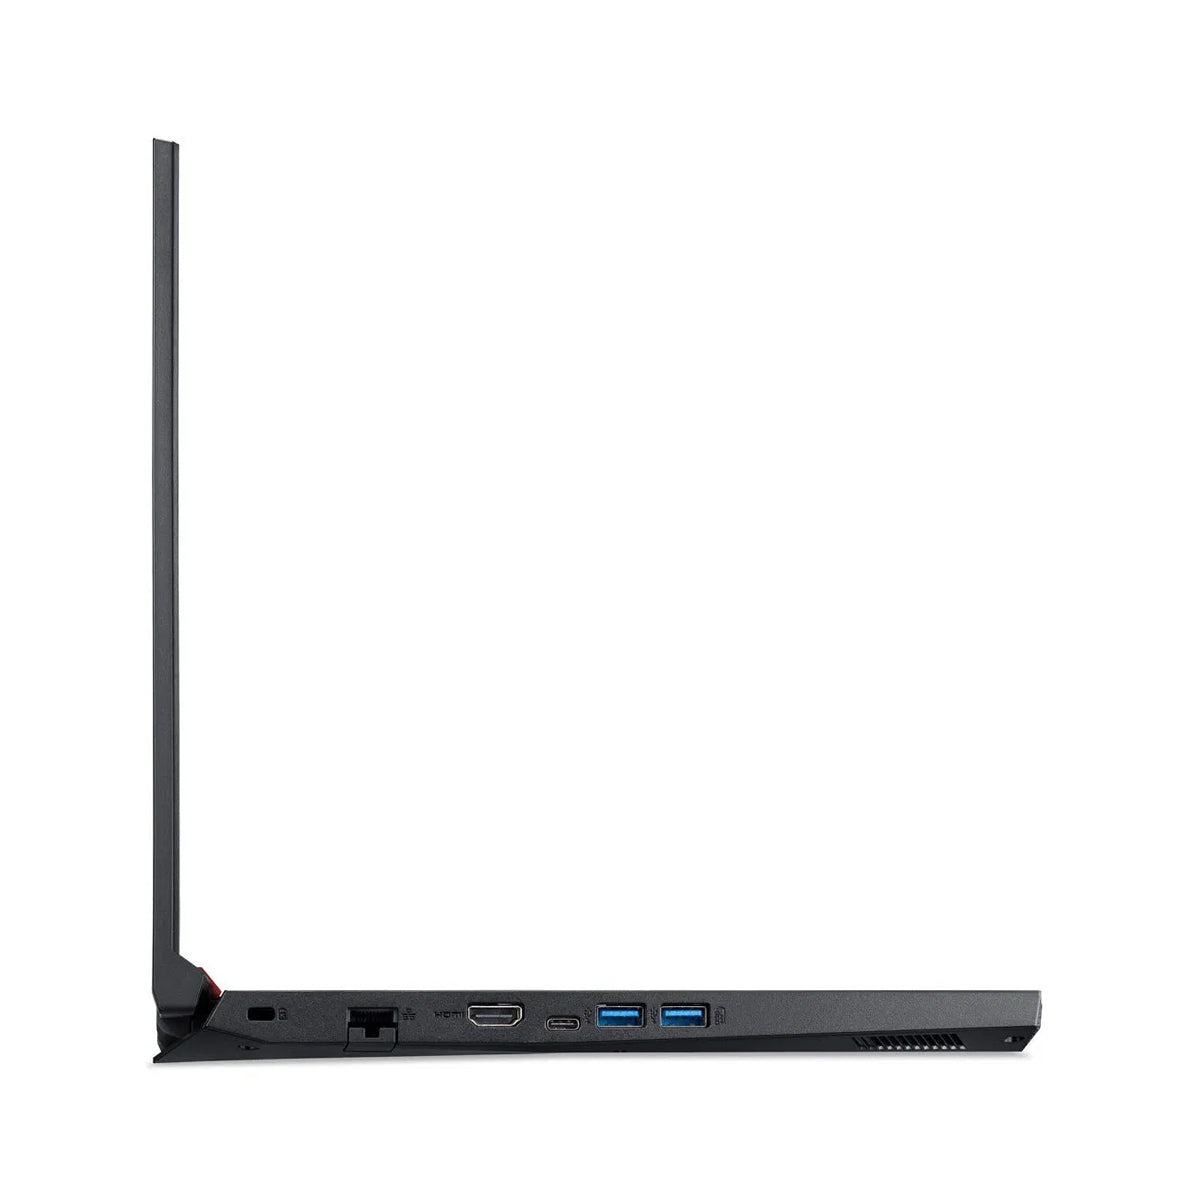 Acer Nitro 5 AN515-54-56GC Intel i5-9300H/4GB/GTX 1660 Ti/1TB/Win 10 Laptop